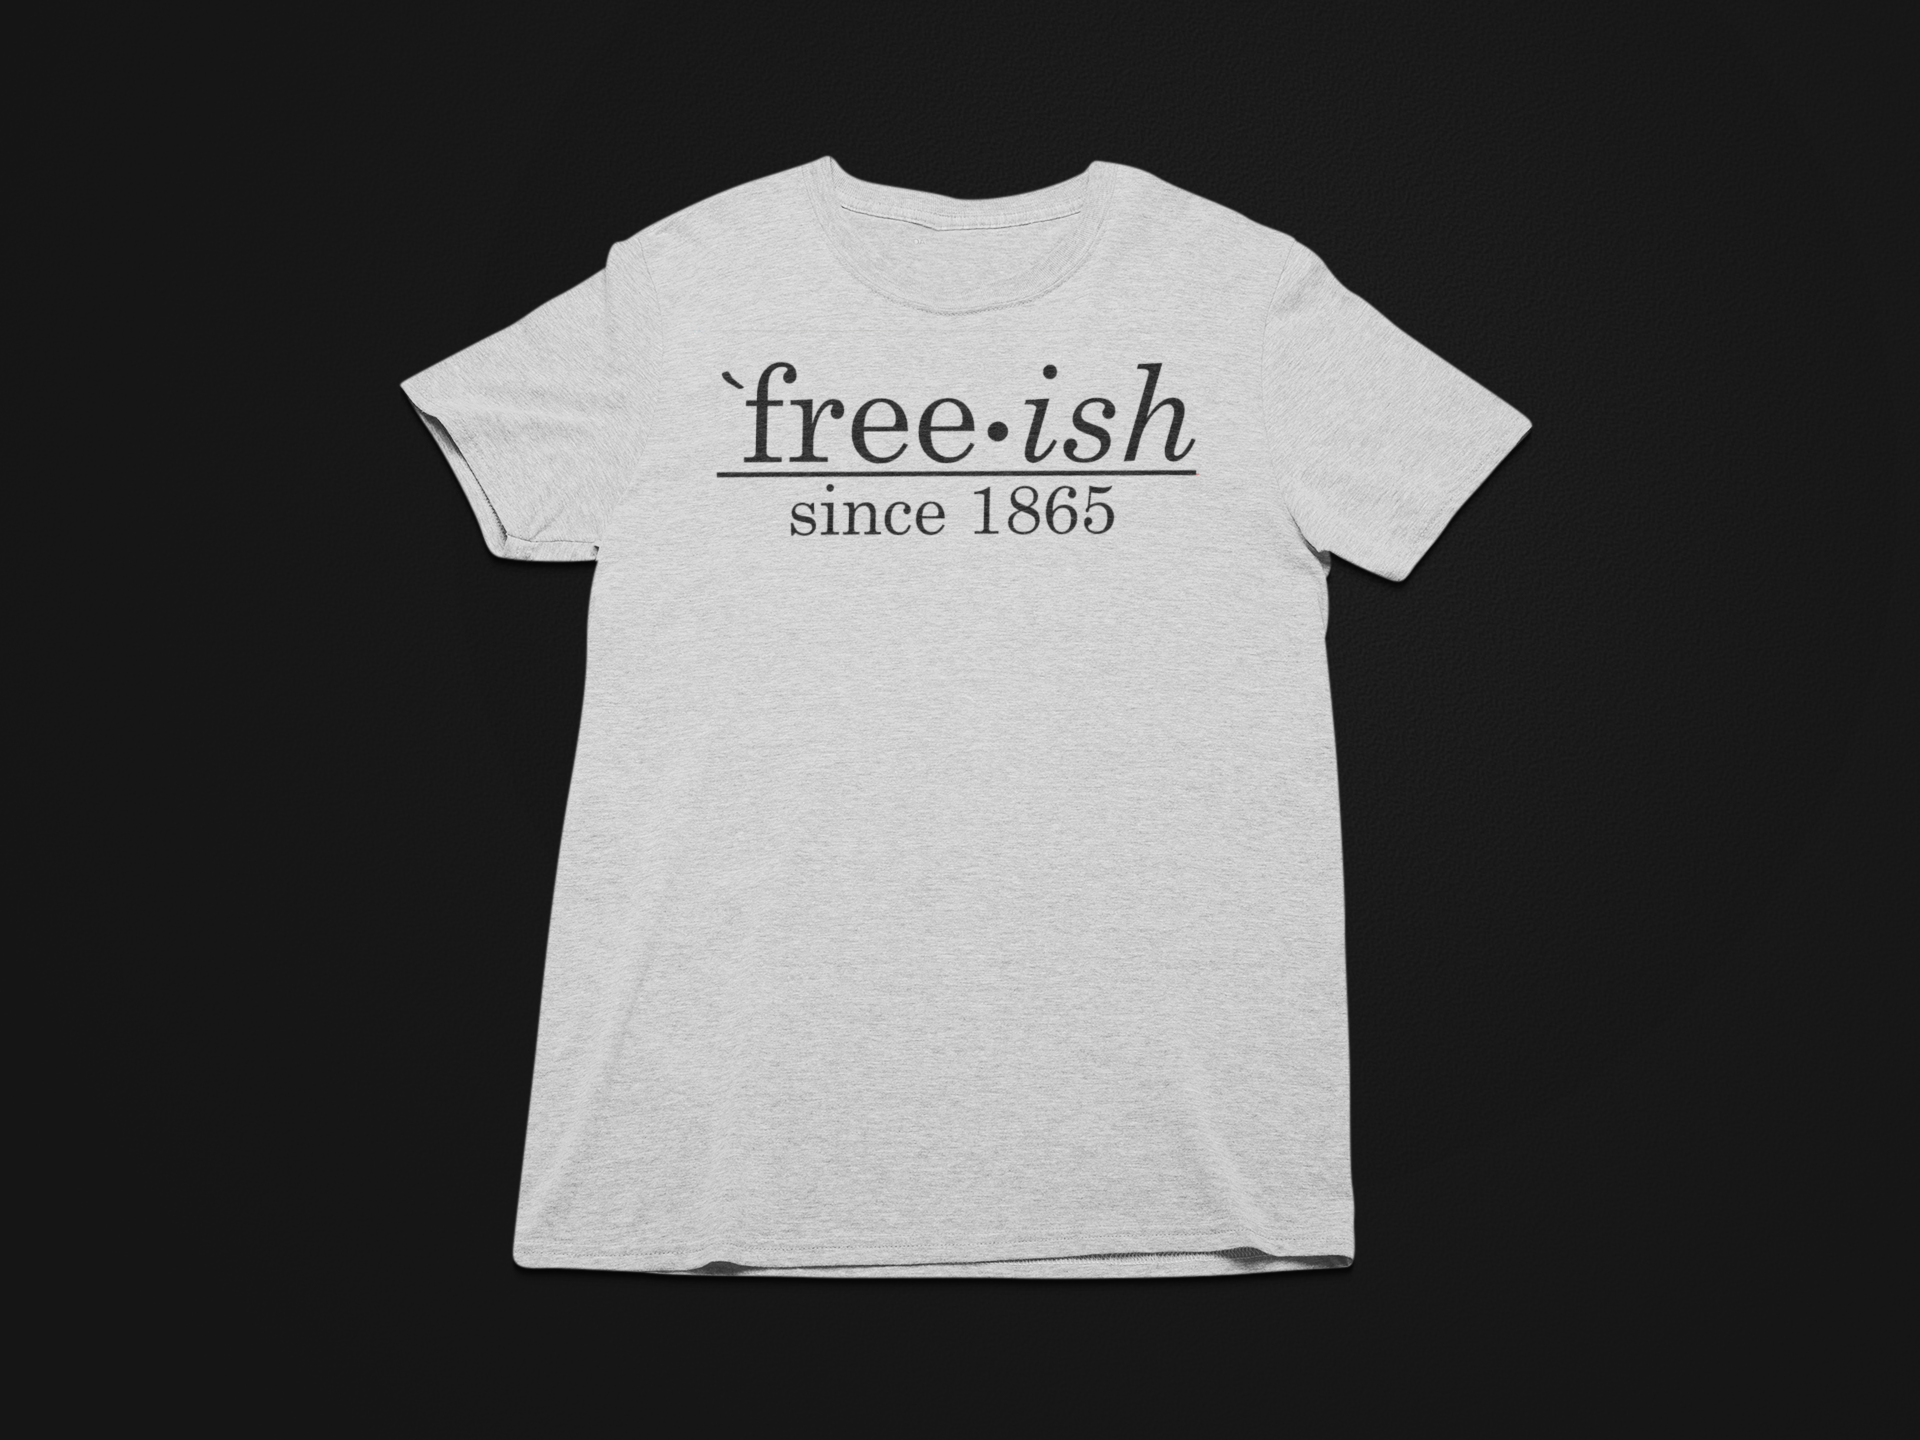 Free-ish "Since 1865" T-Shirt